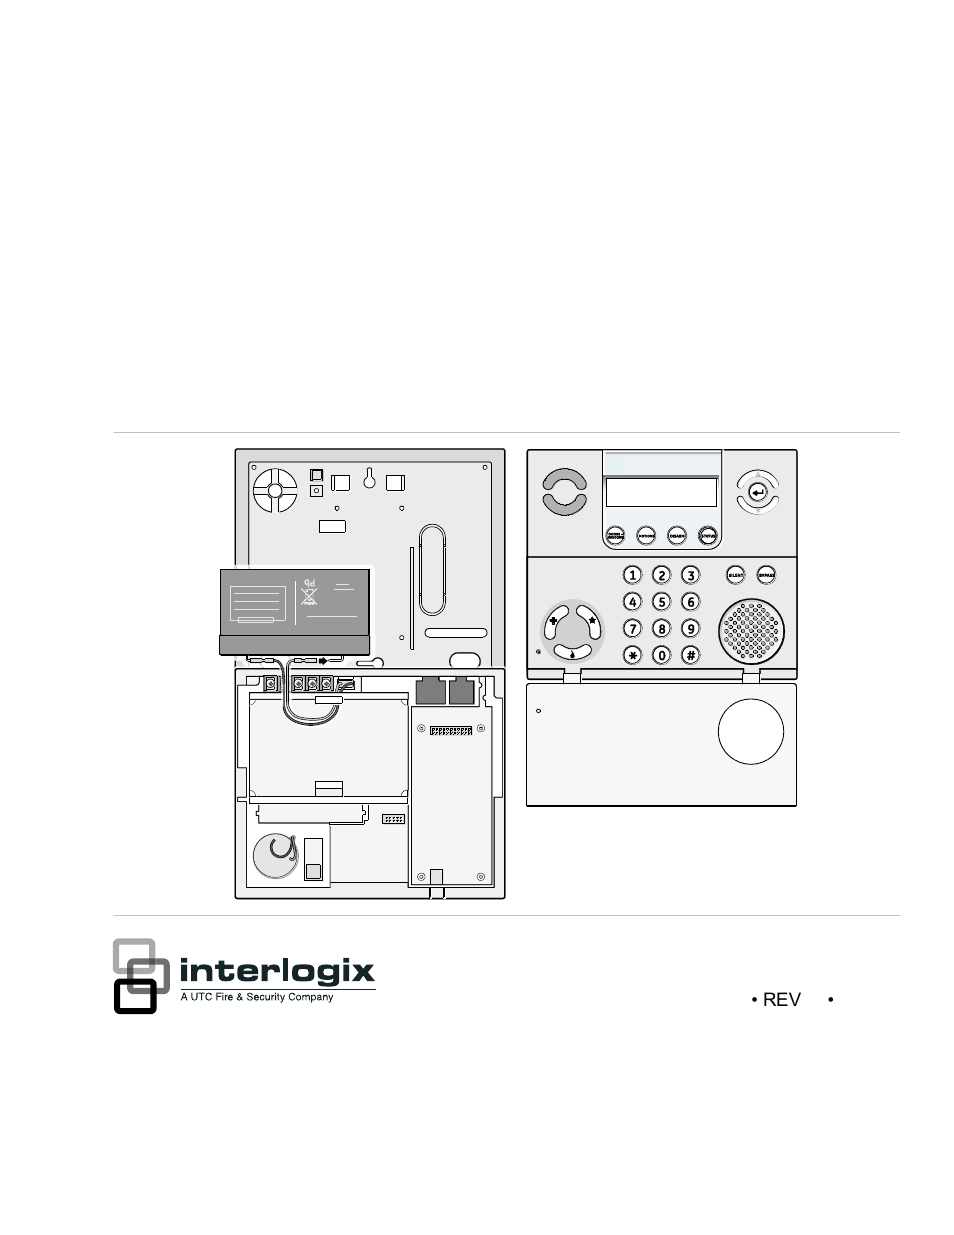 Interlogix Simon XT Installation Manual User Manual | 74 pages